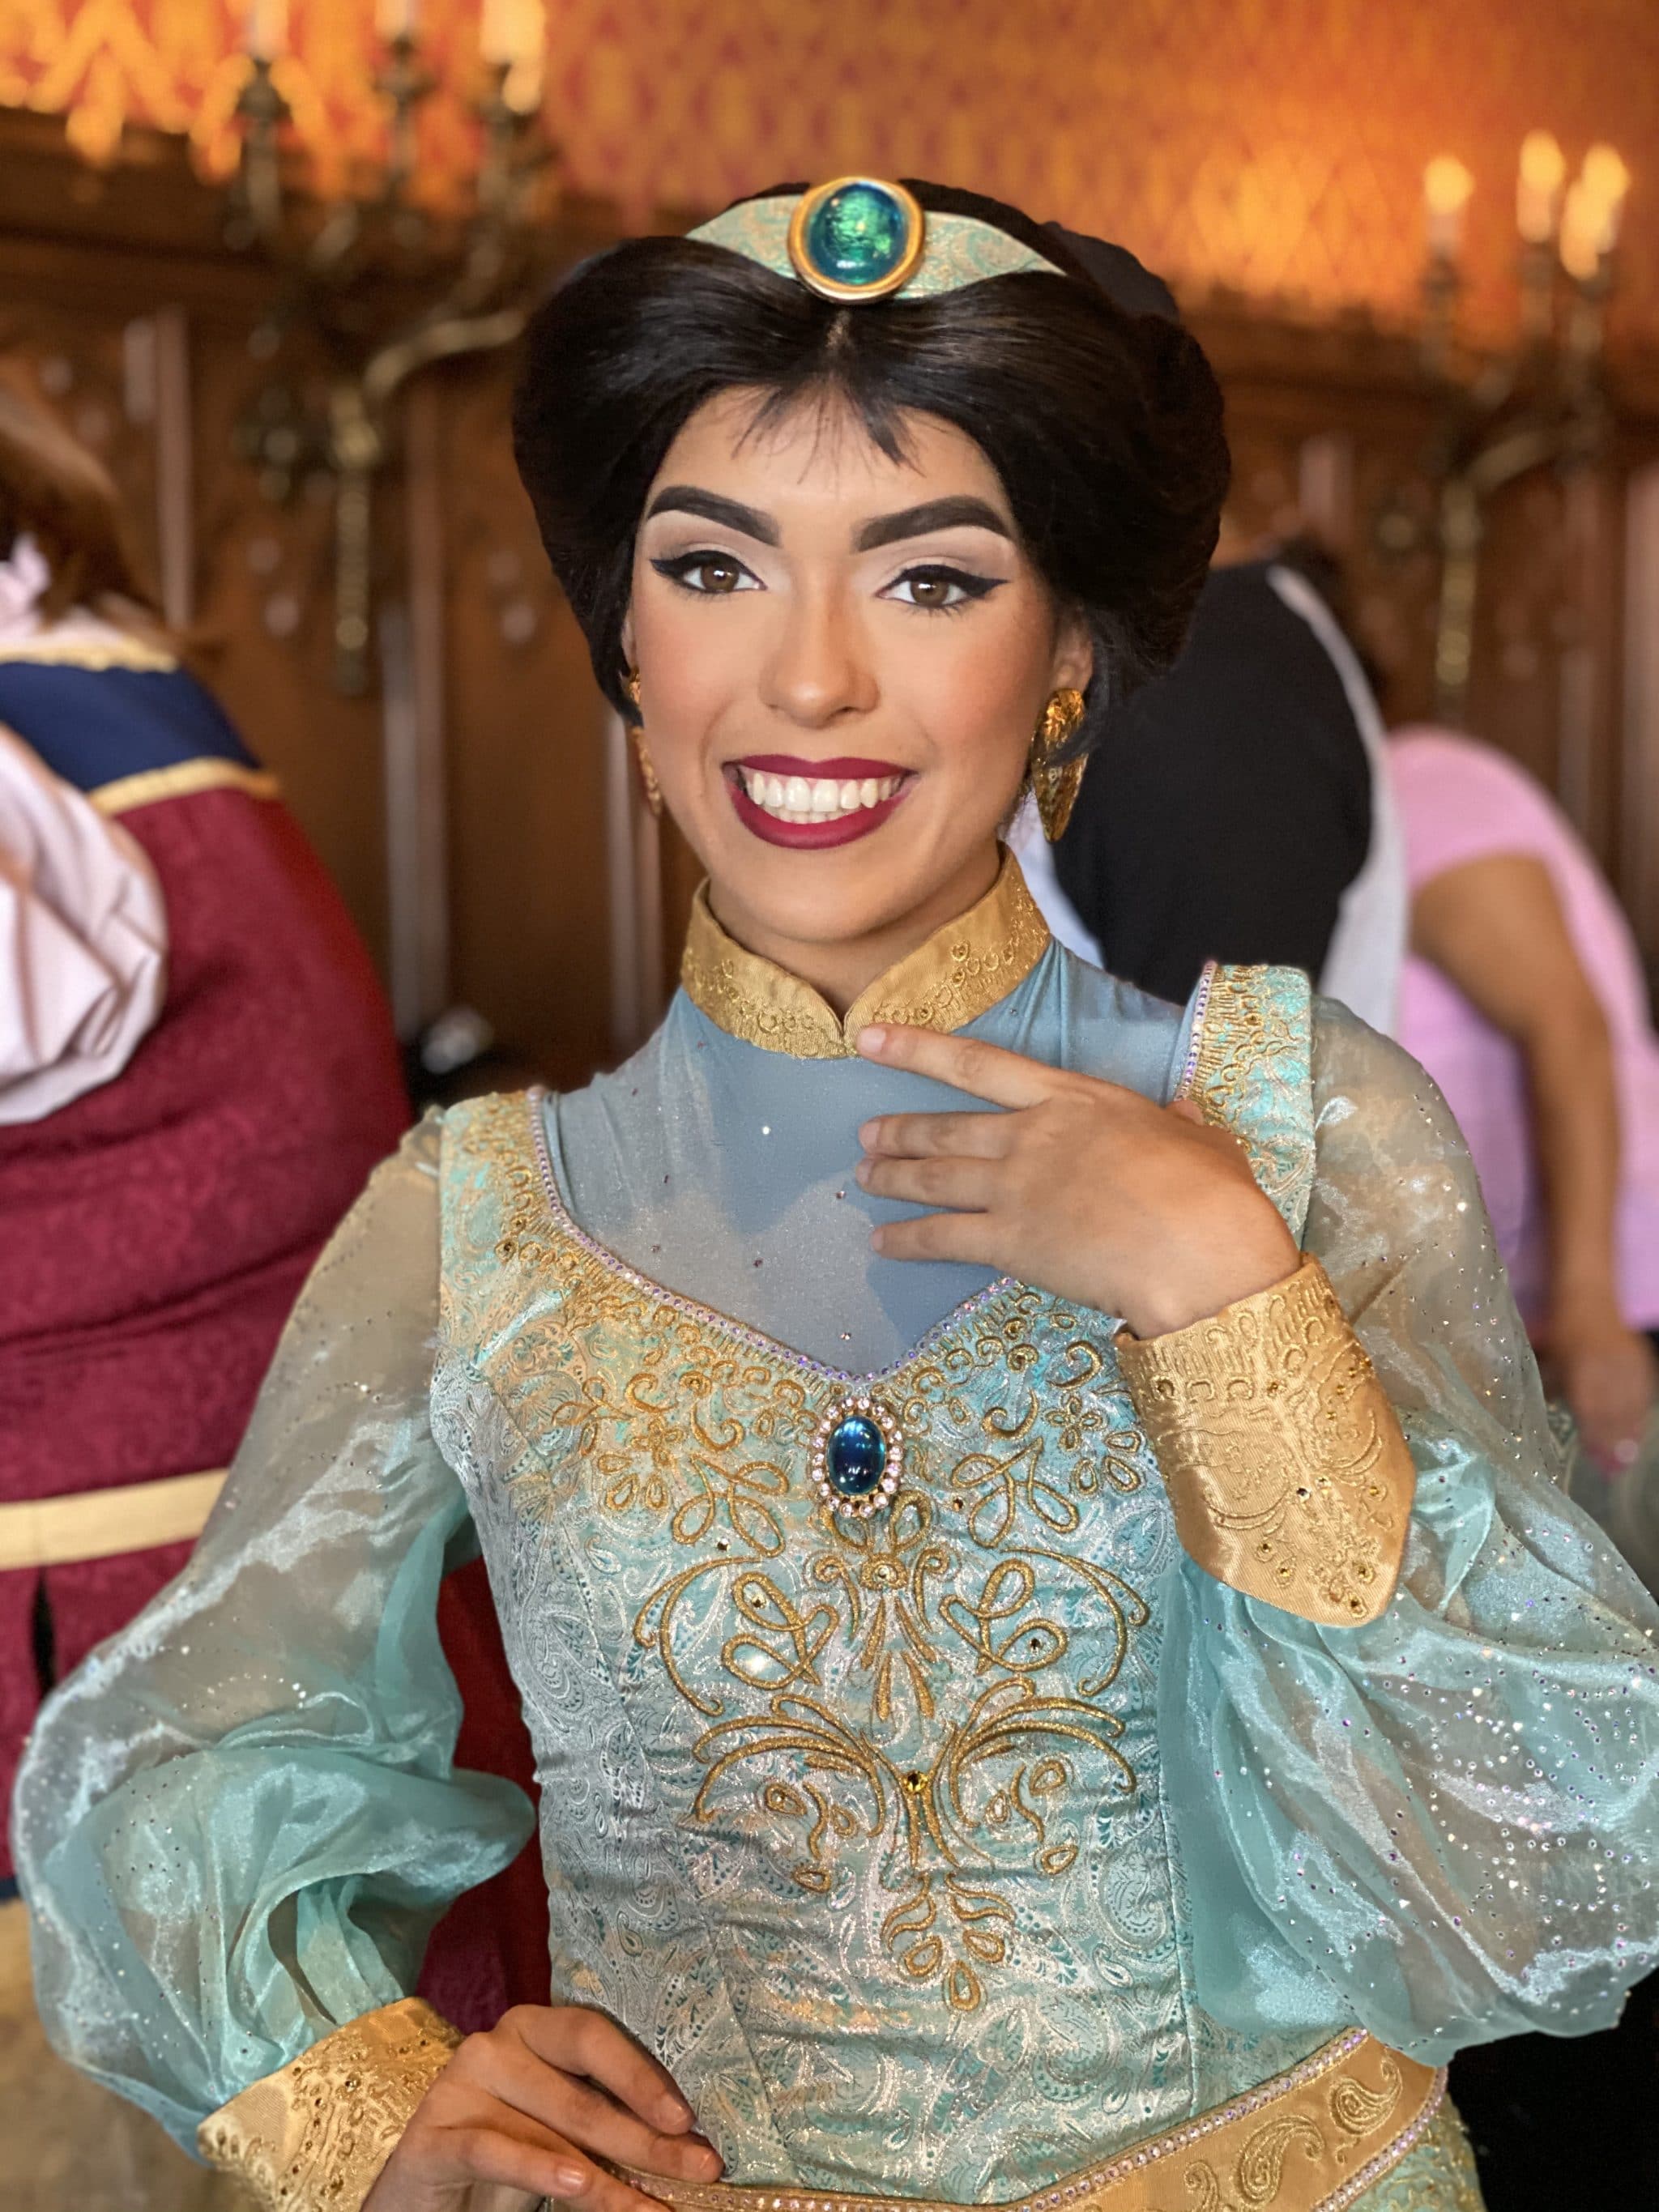 Cinderella’s Royal Table Vegan Breakfast Review in the Magic Kingdom at Walt Disney World